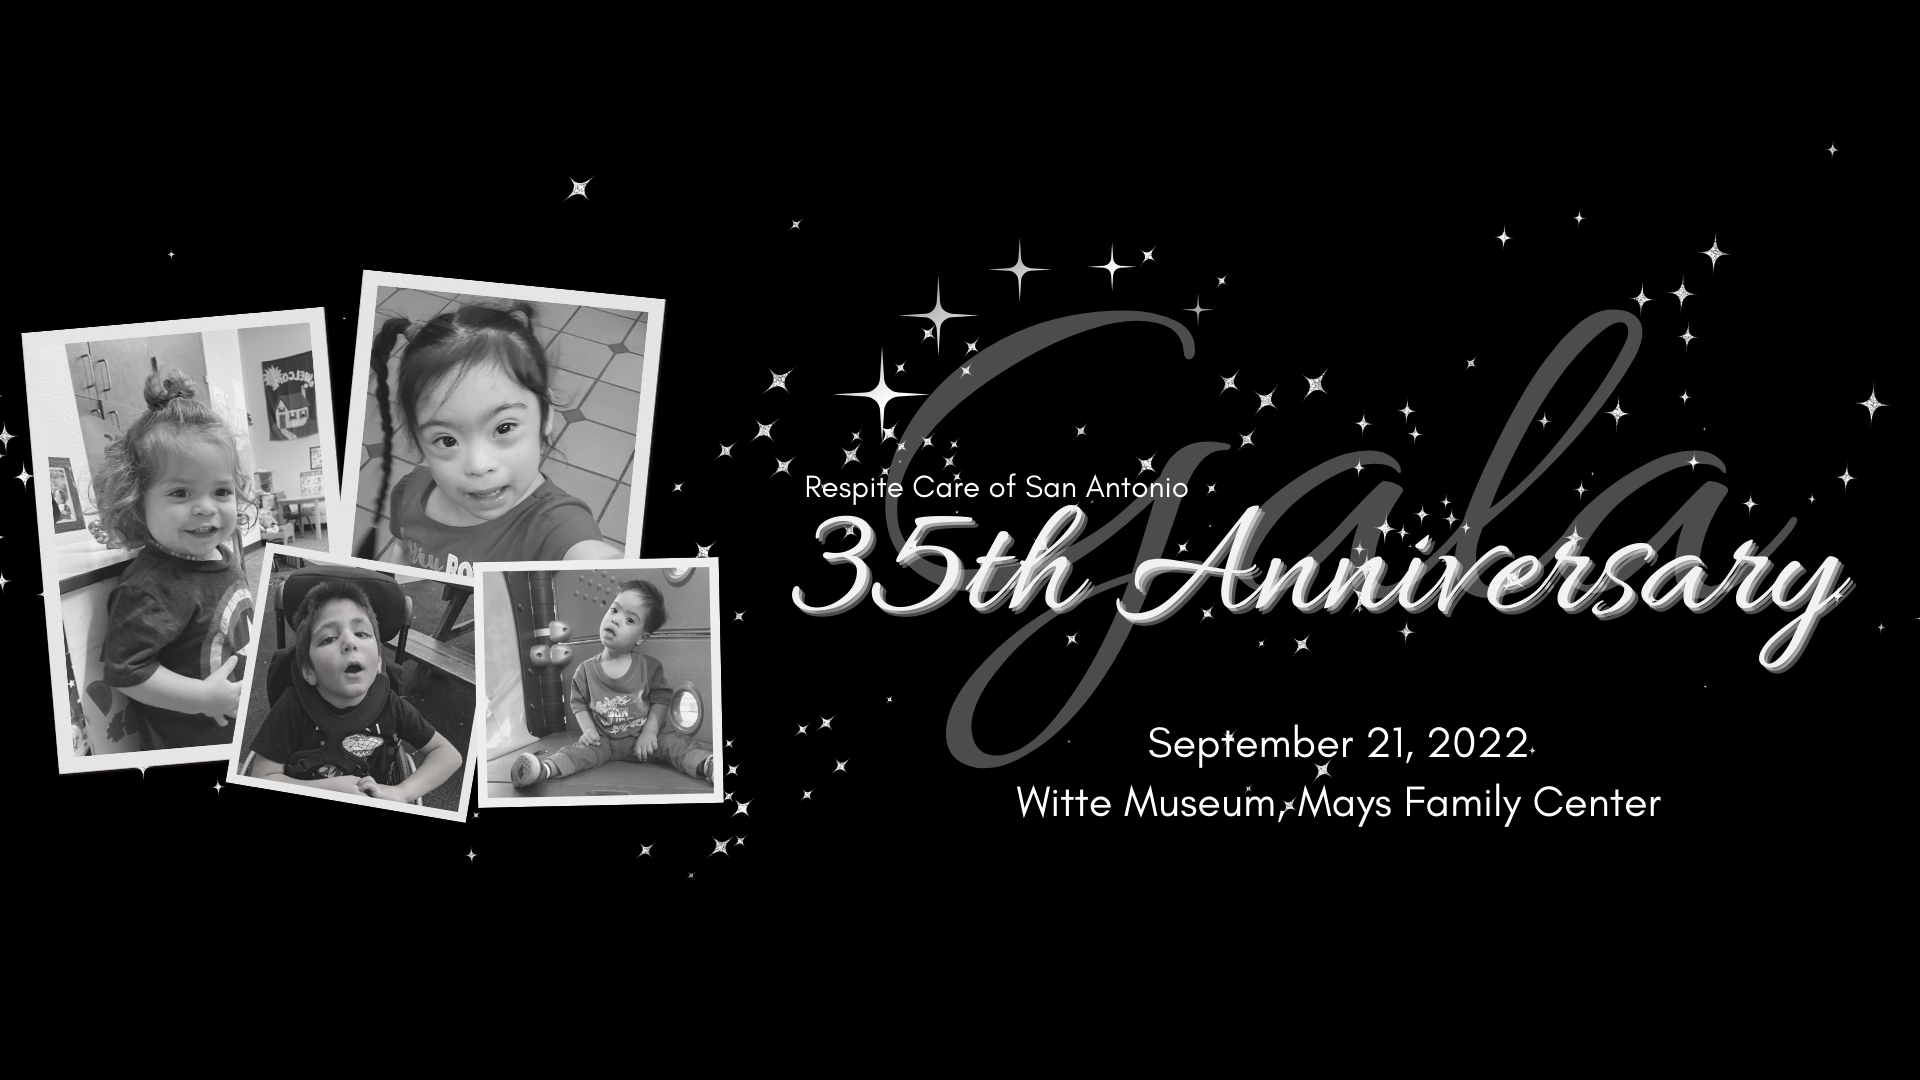 Respite Care of San Antonio 35th Anniversary Gala, September 21, 2022